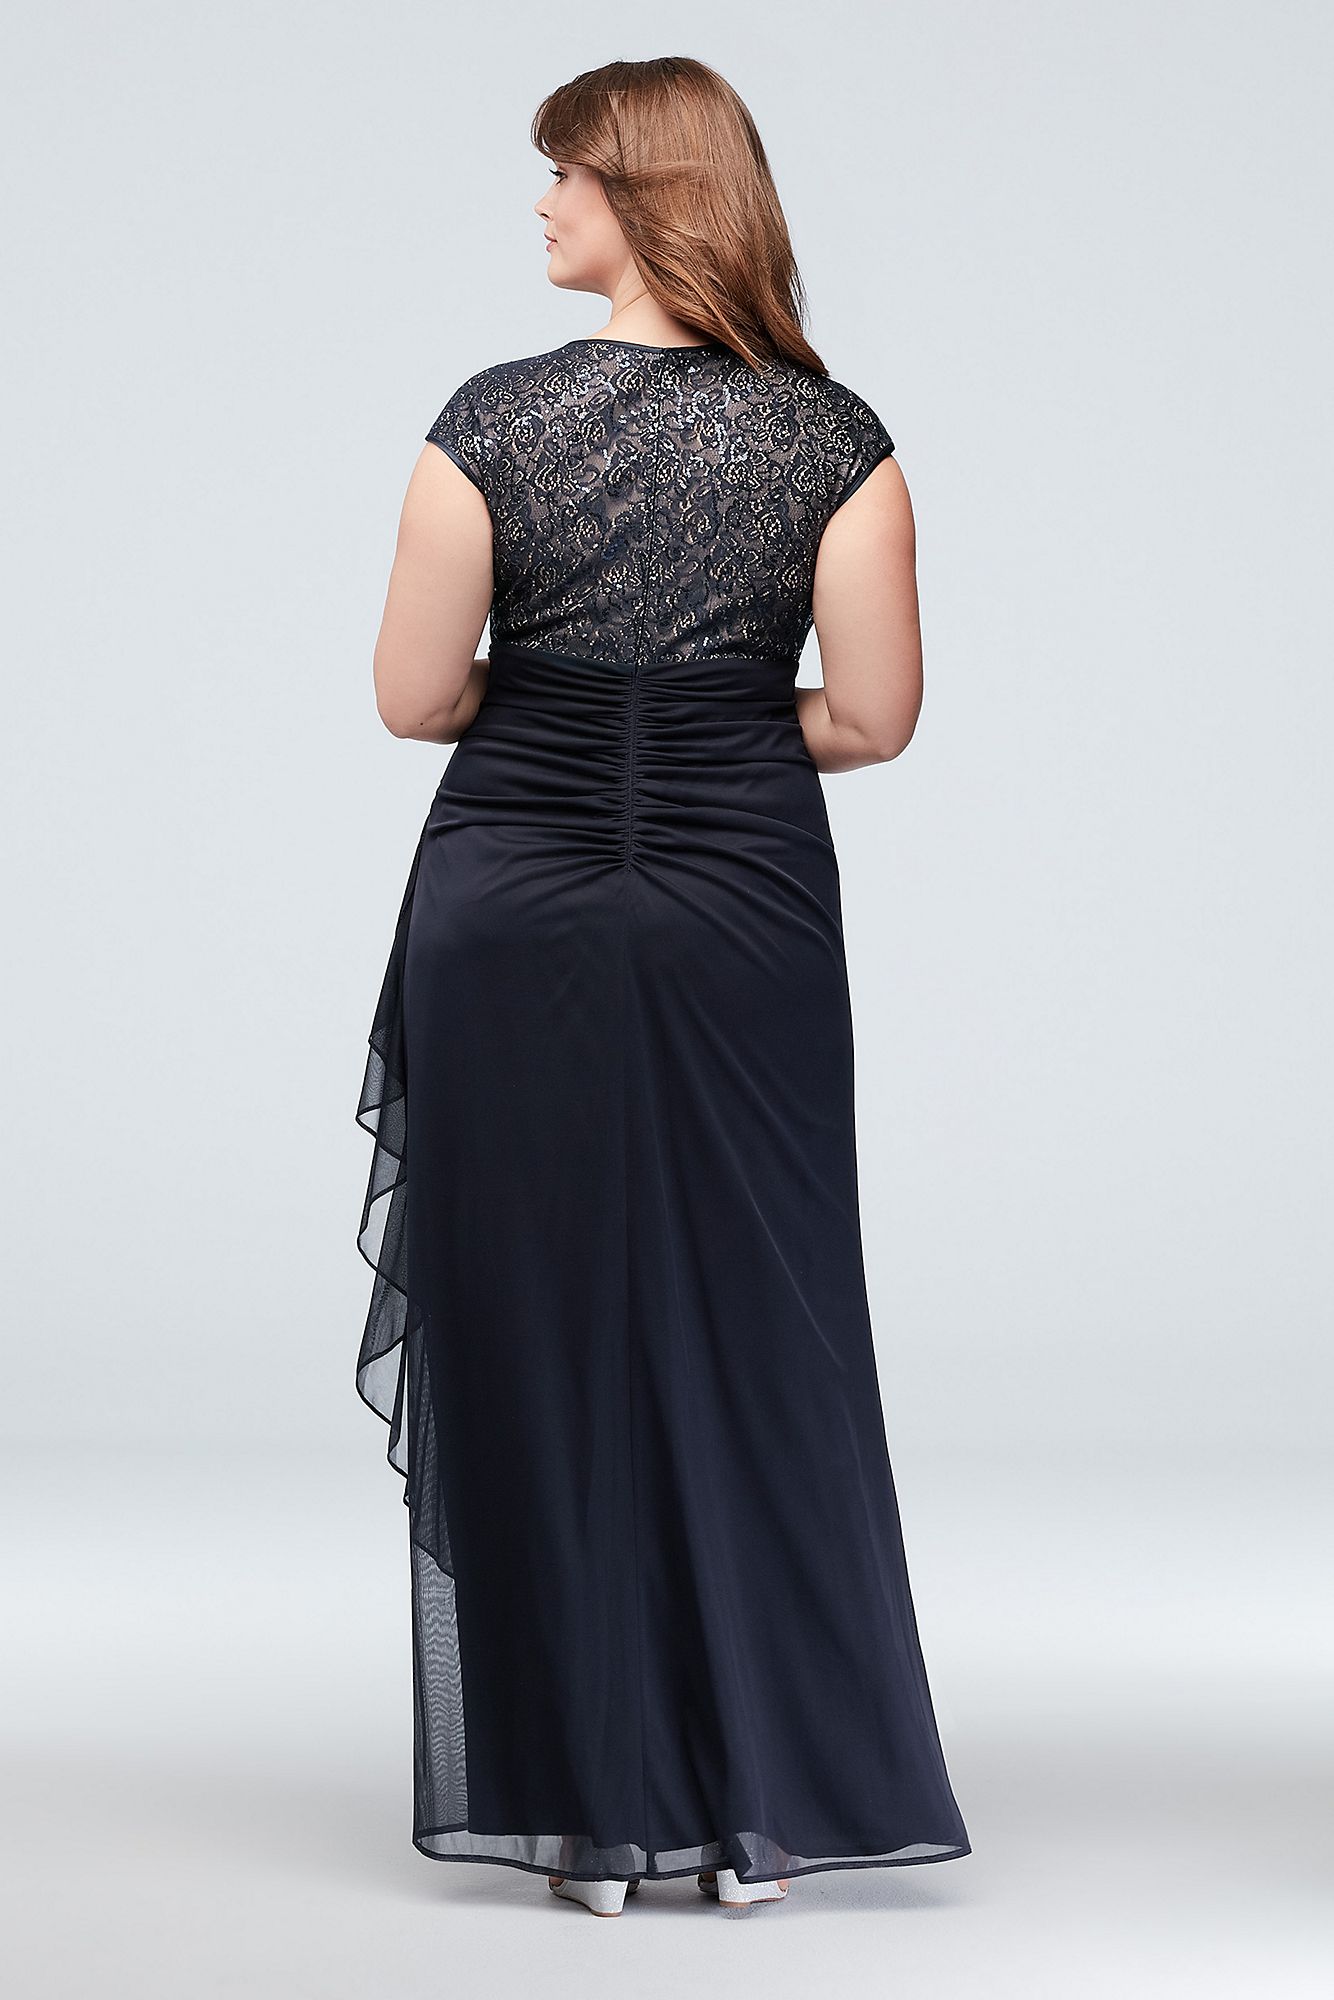 Long Sheath Cap Sleeves Lace Keyhole Plus Size Formal A22197W Dresses